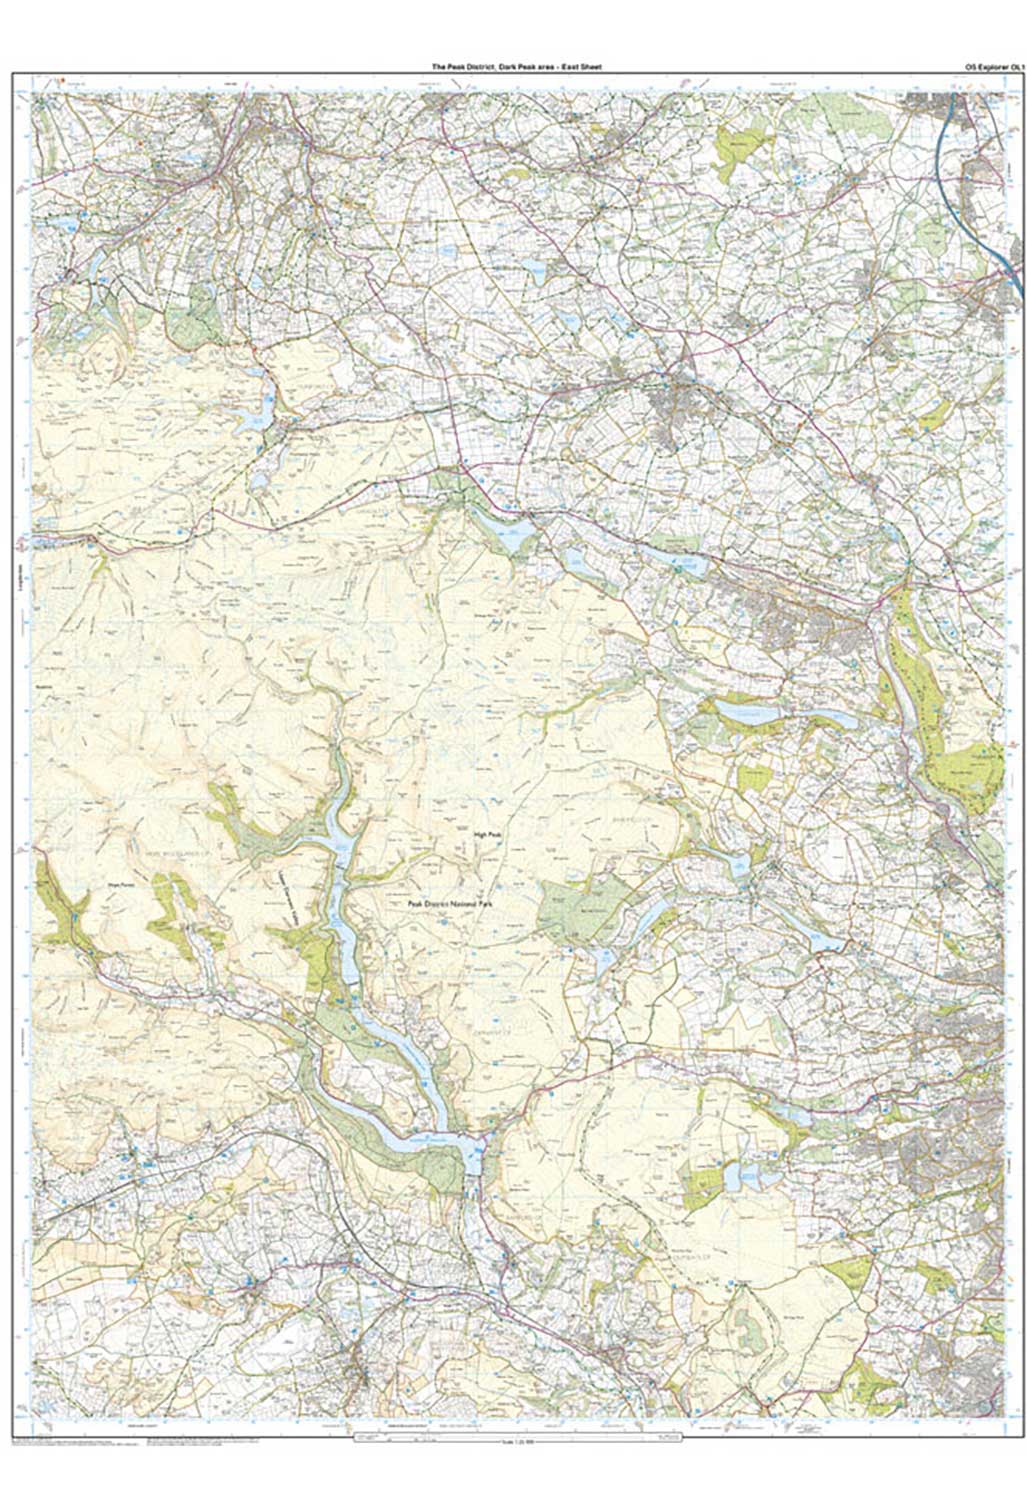 Ordnance Survey The Peak District - Dark Peak Area - OS Explorer OL1 Map